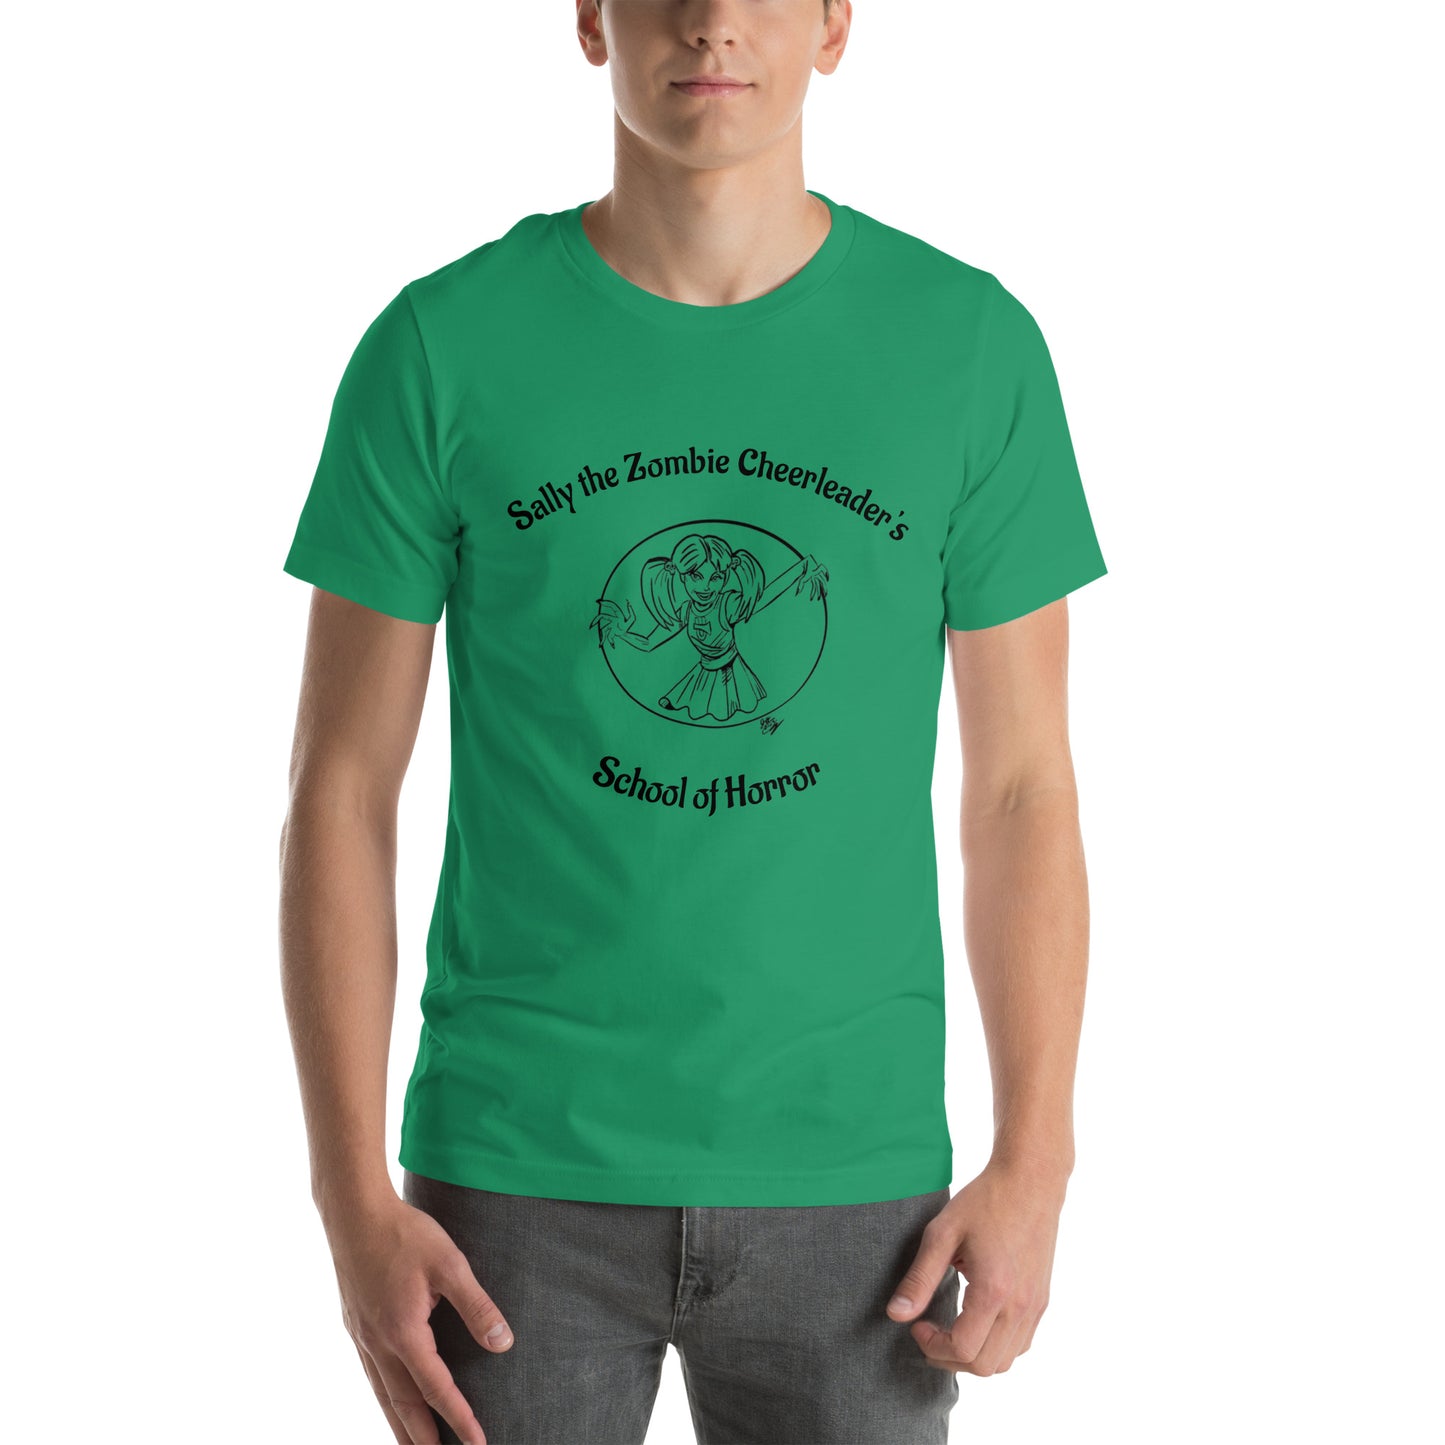 Sally TZC Unisex t-shirt